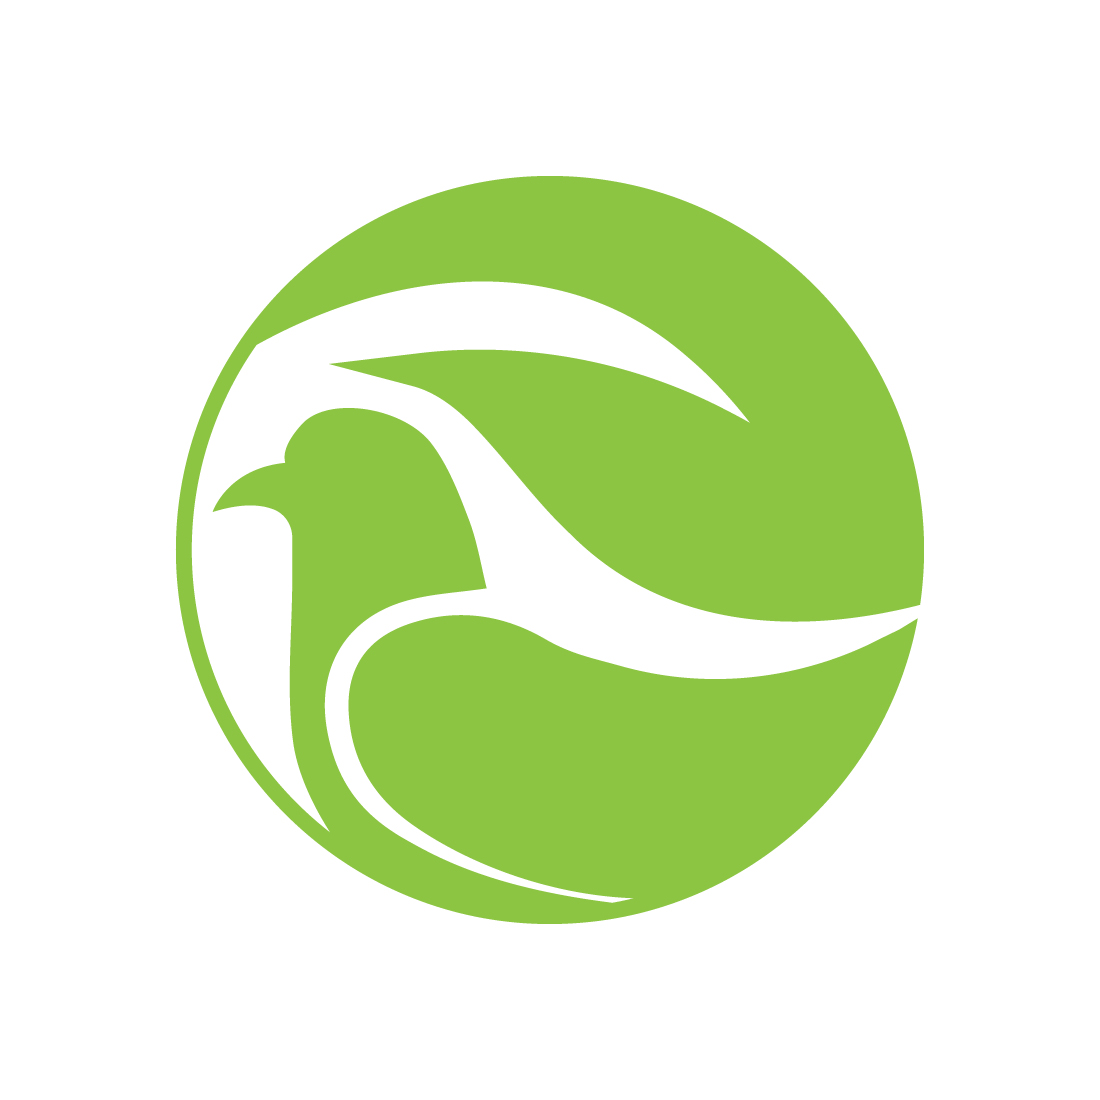 Luxury Bird Nest logo design vector images Green Bird logo design template icon design preview image.